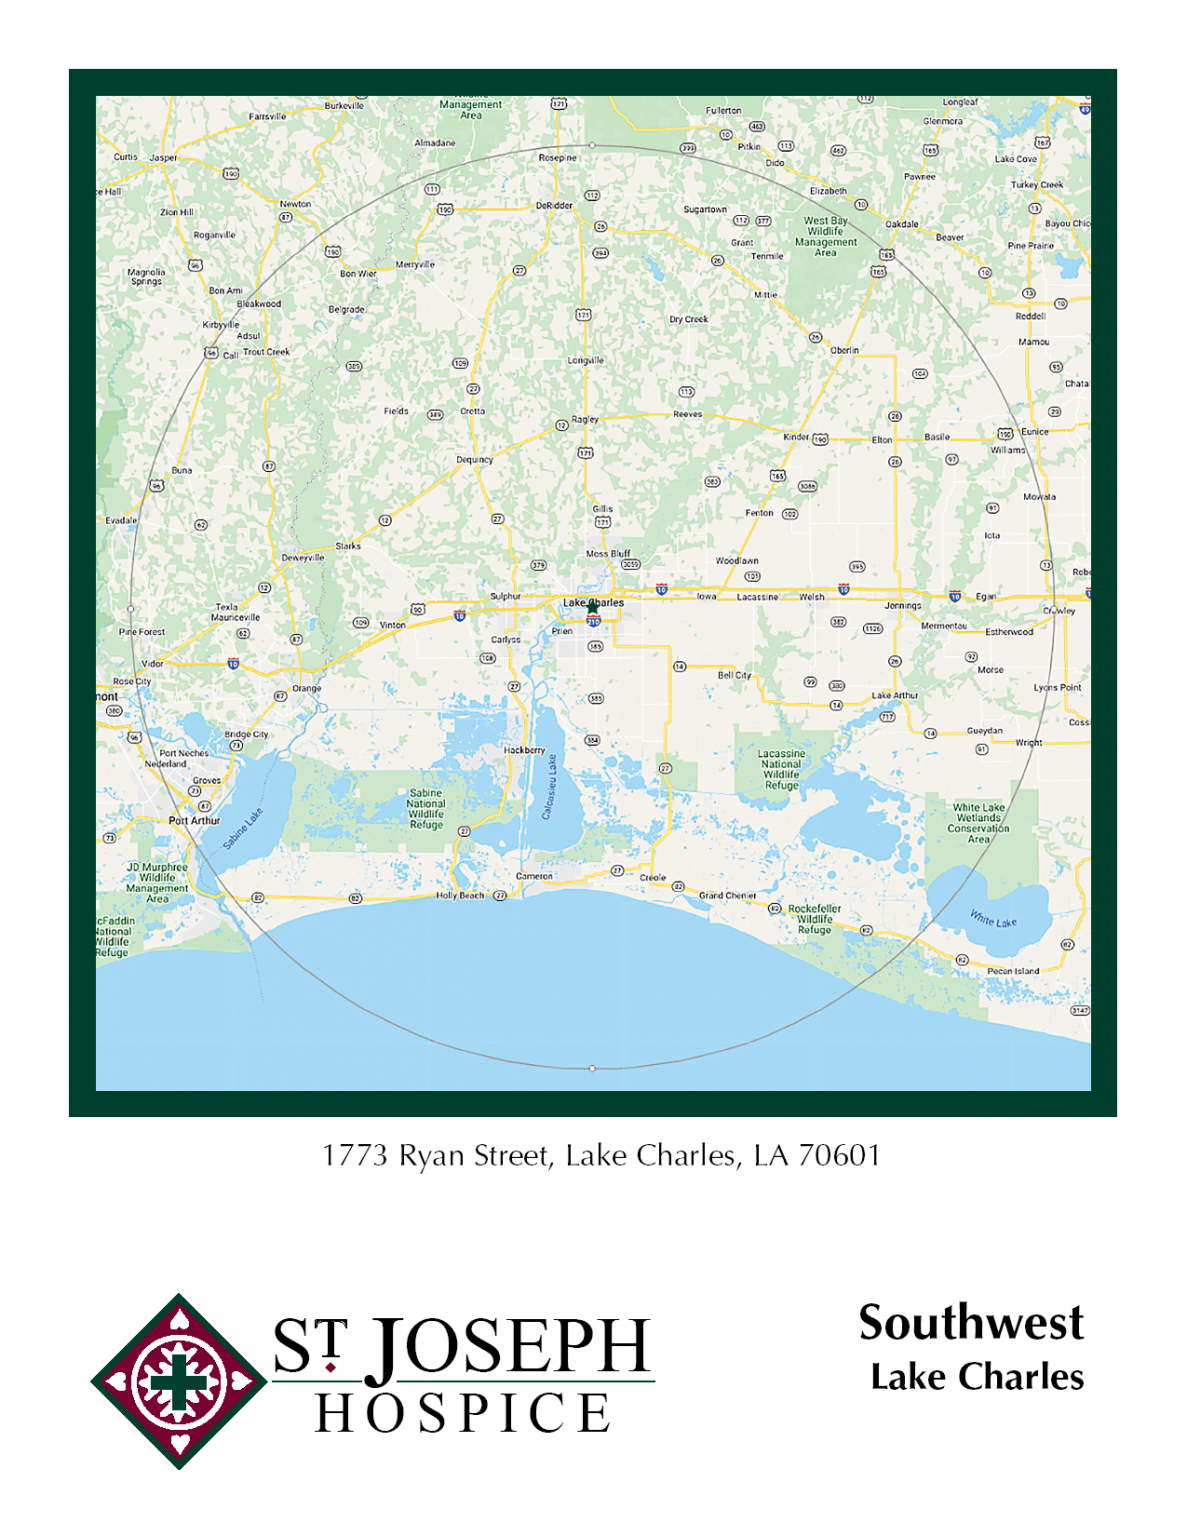 SJH Southwest LC Map 09 2020 1187x1536 